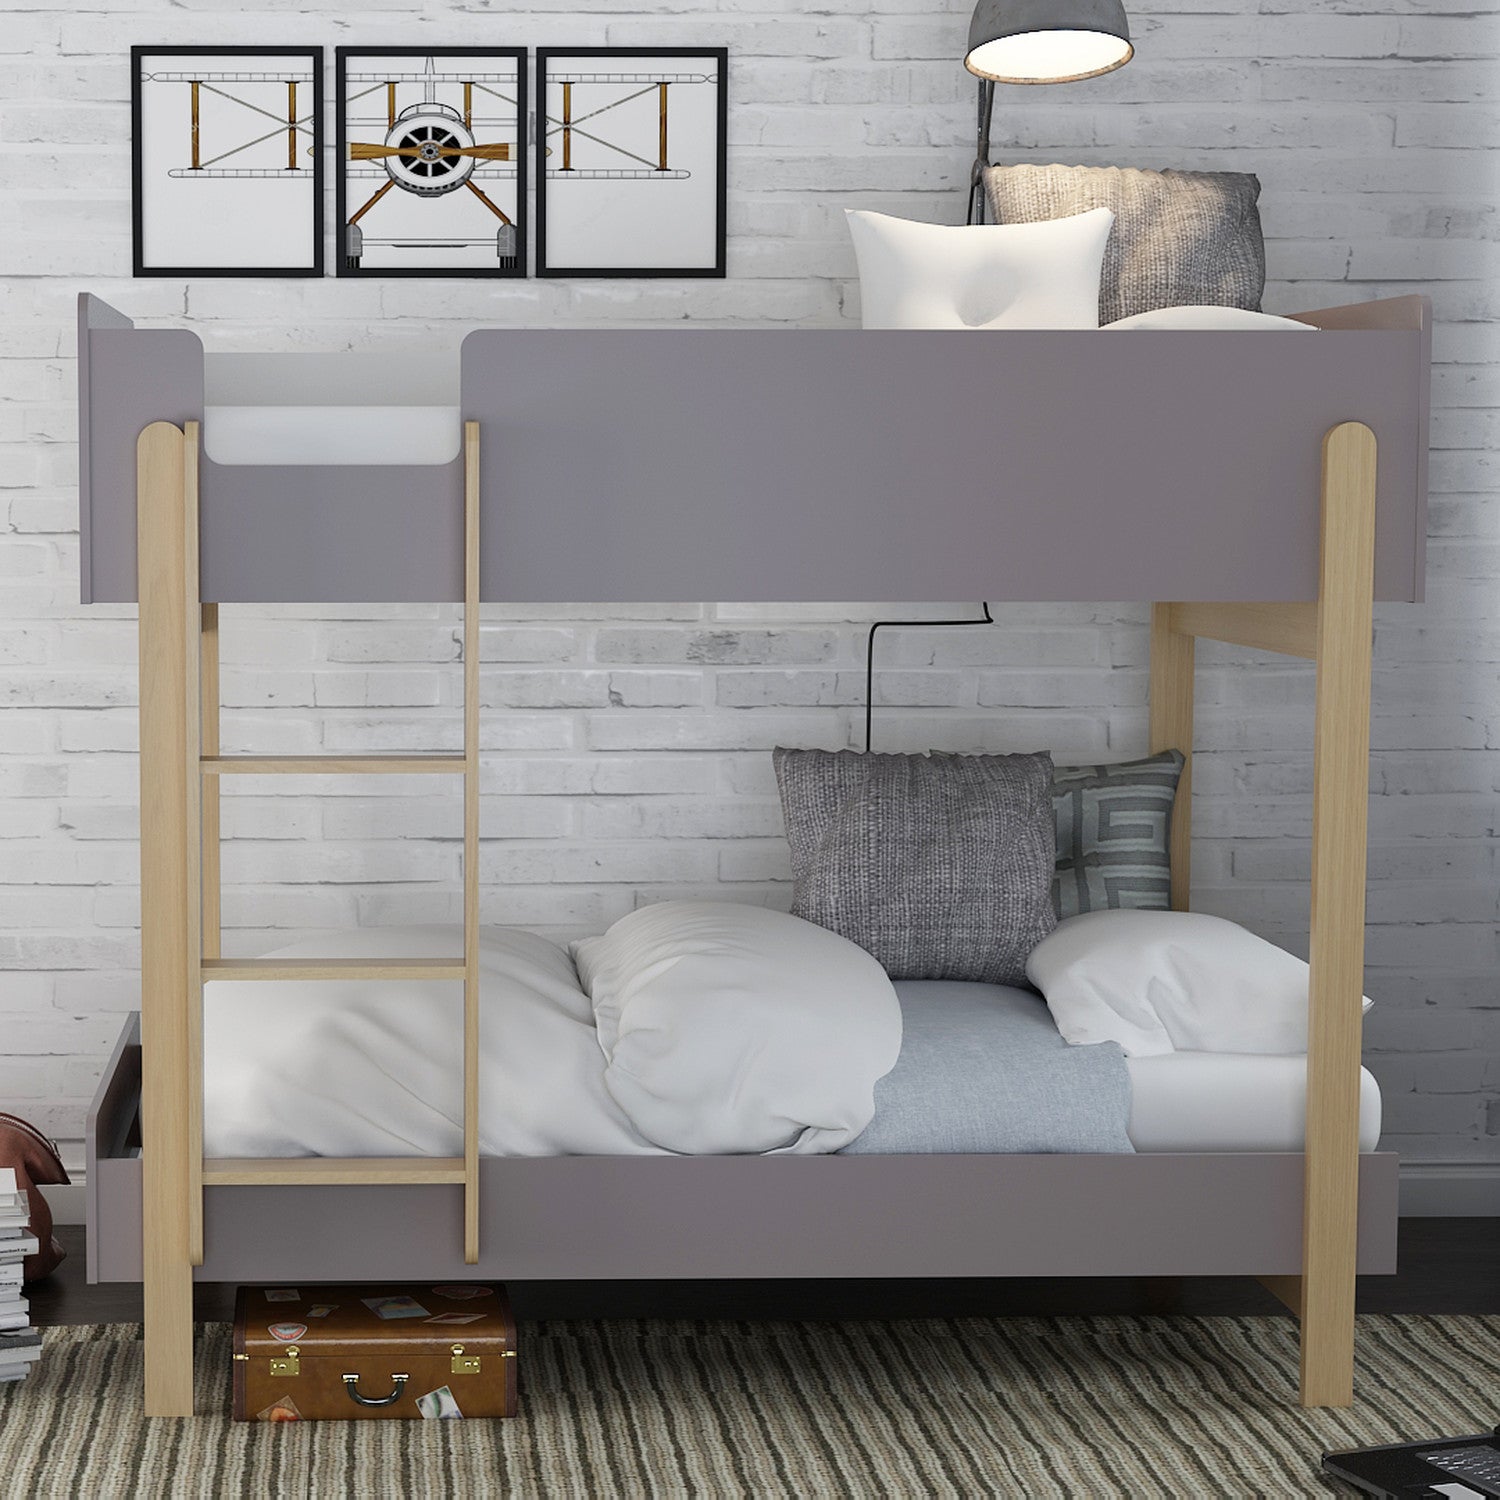 LPD Furniture Hero Bunk Bed